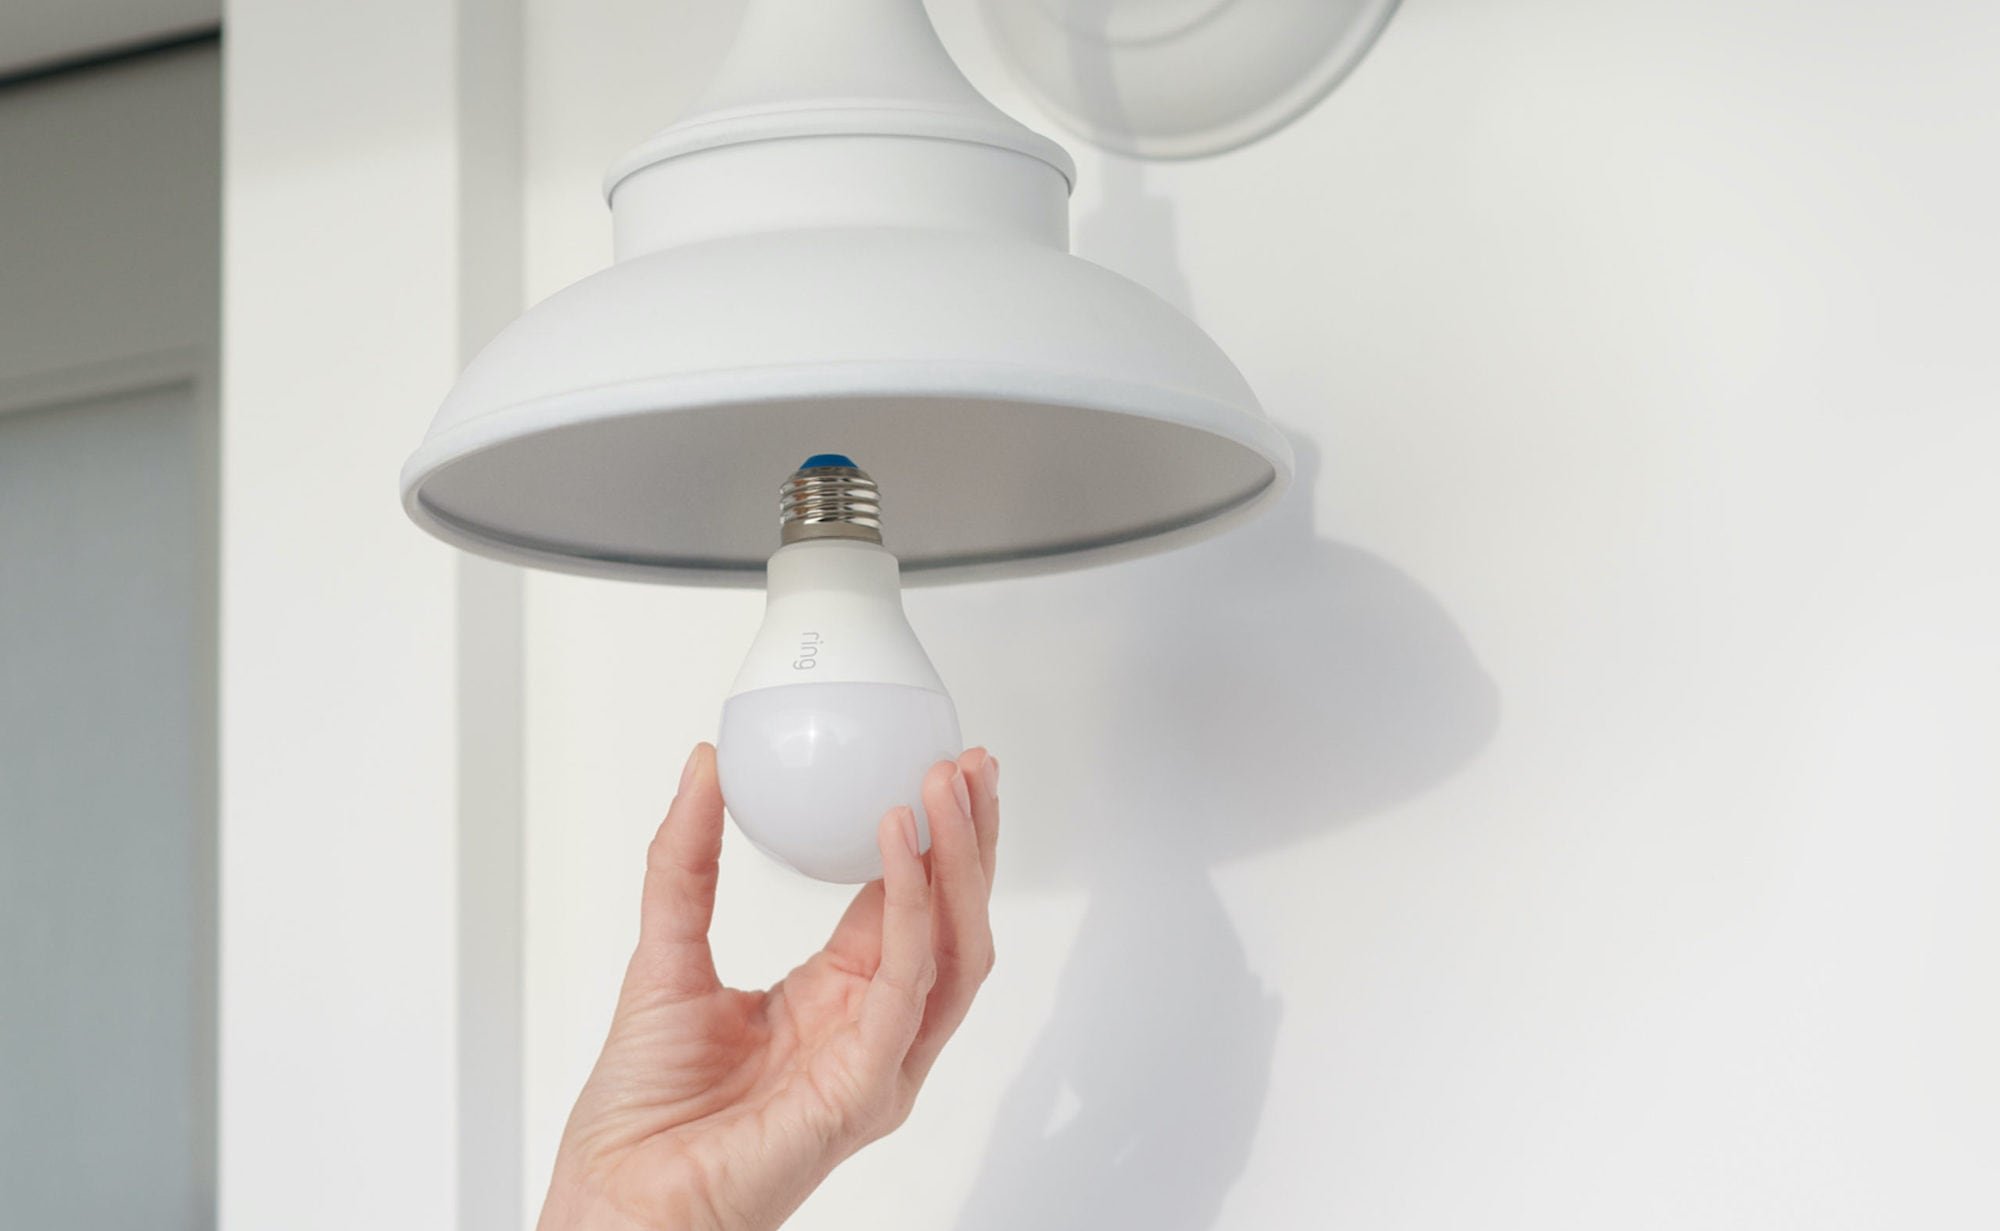 Ring A19 & PAR38 Smart LED Lightbulbs let you remotely manage your home lighting